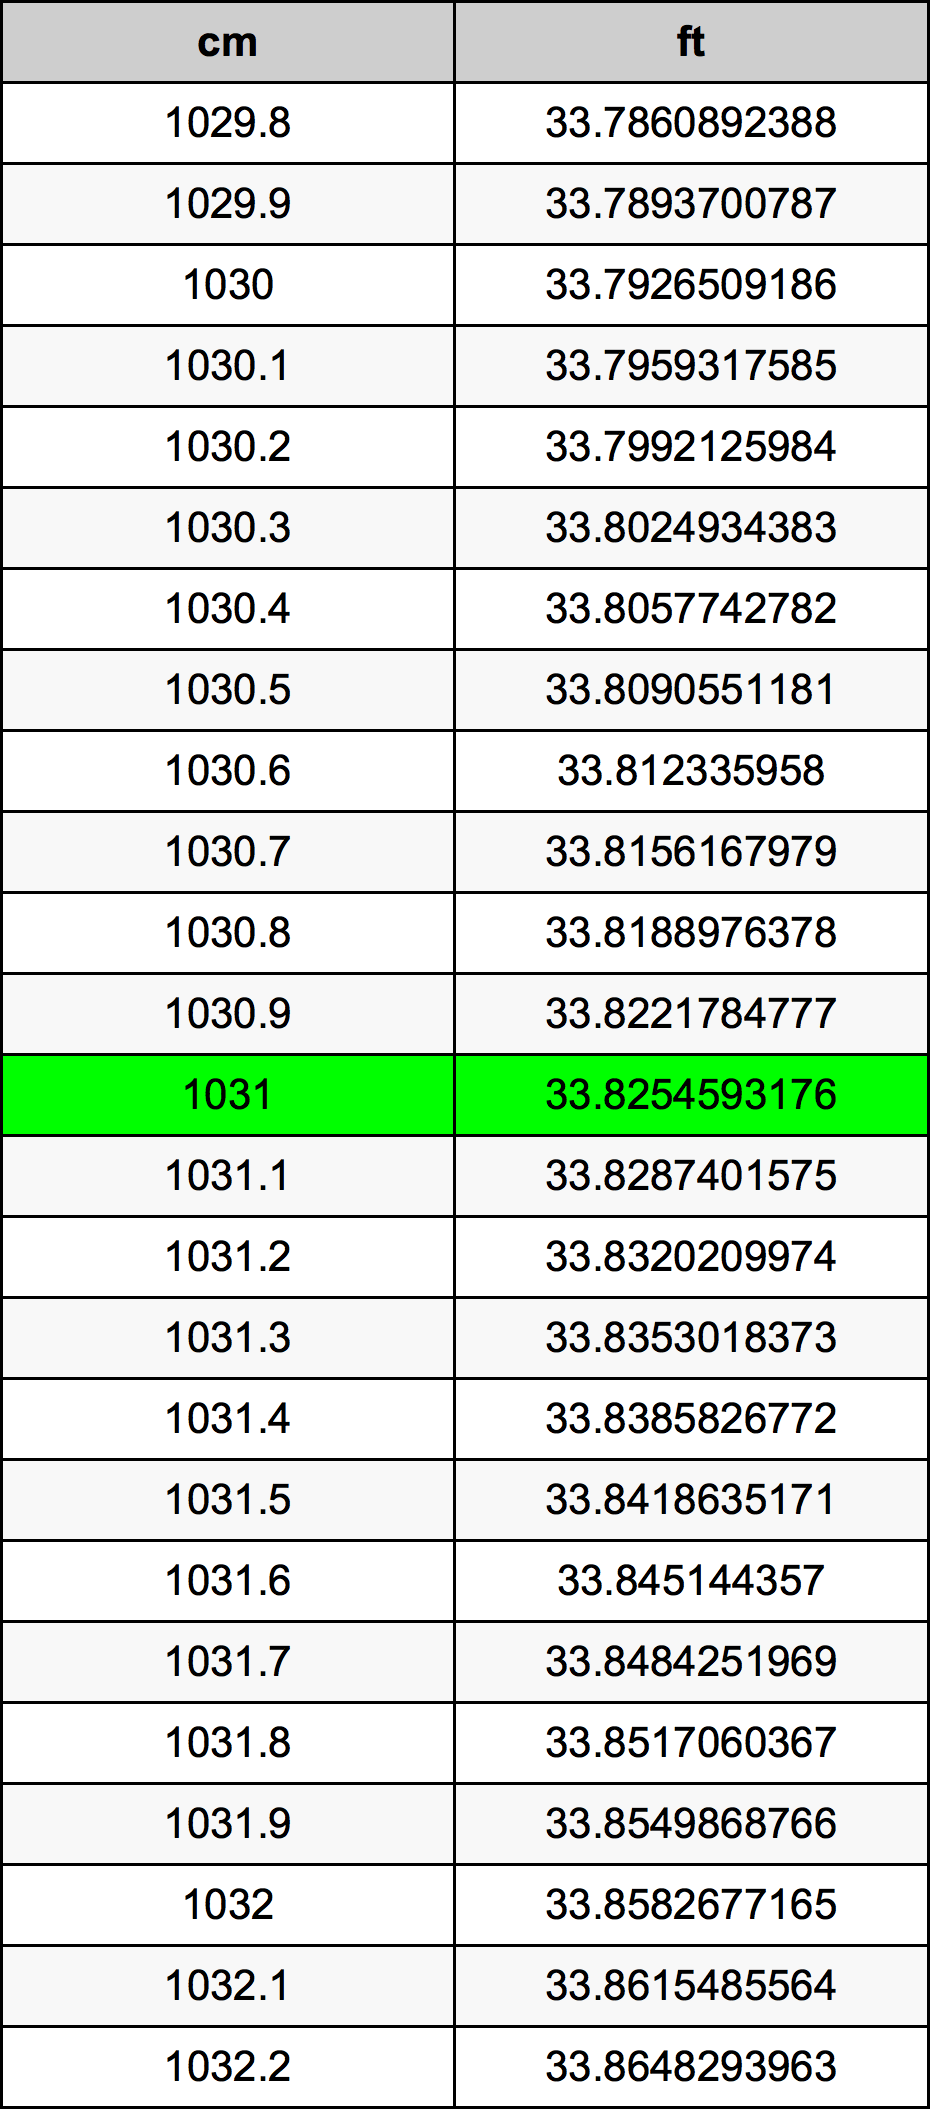 1031 Centimeter Table